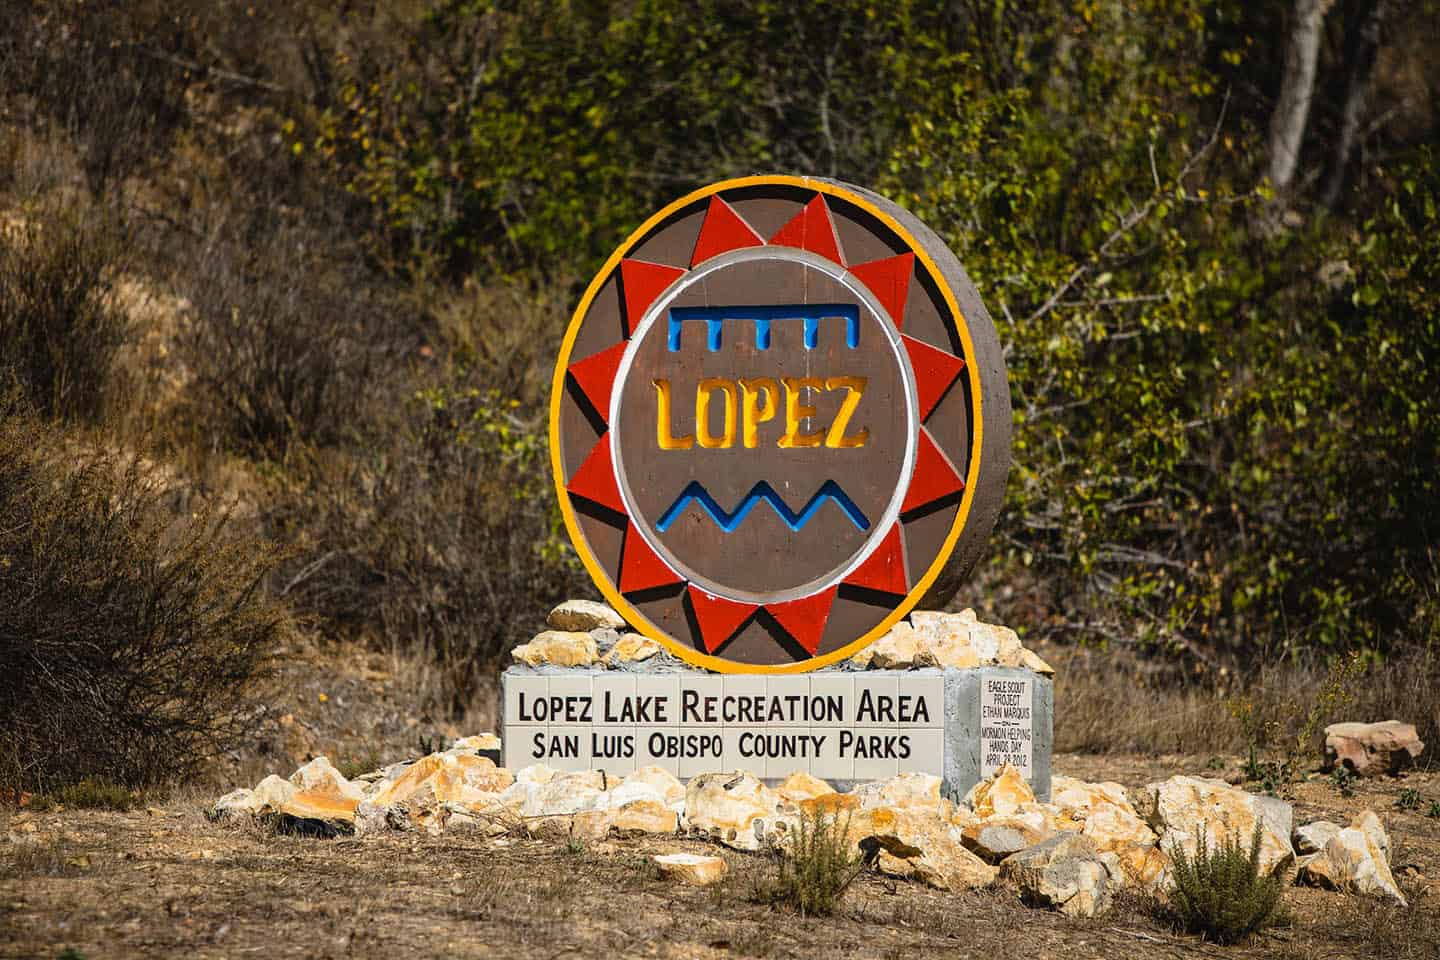 Lopez Lake Recreational Area